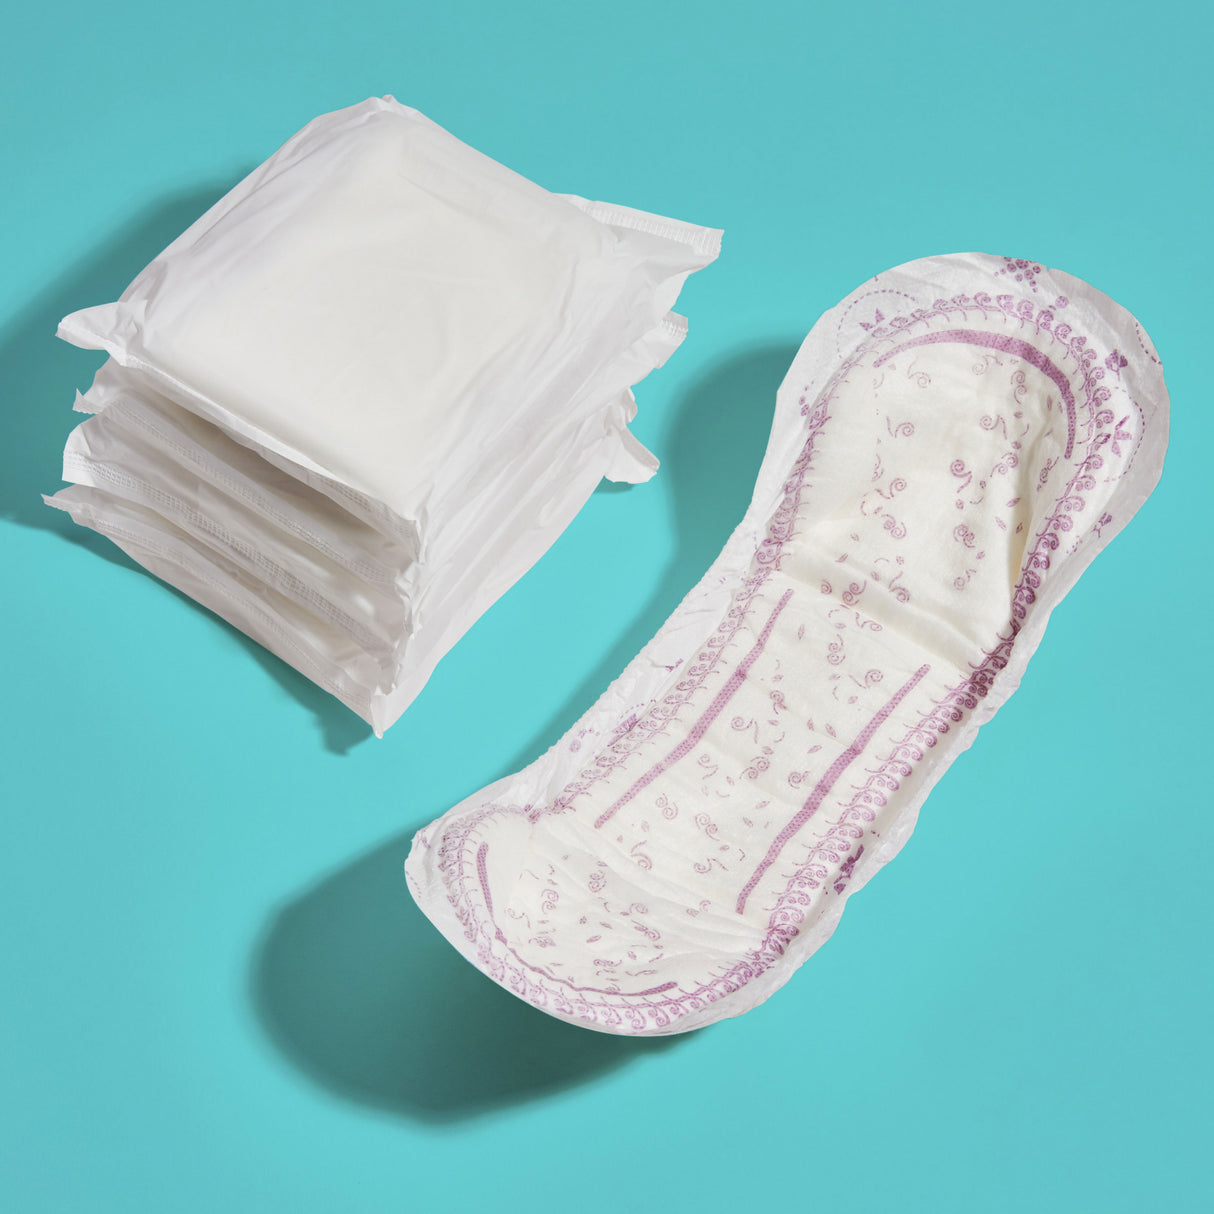 Wholesale underwear sanitary napkin pads, Sanitary Pads, Feminine Care  Products 